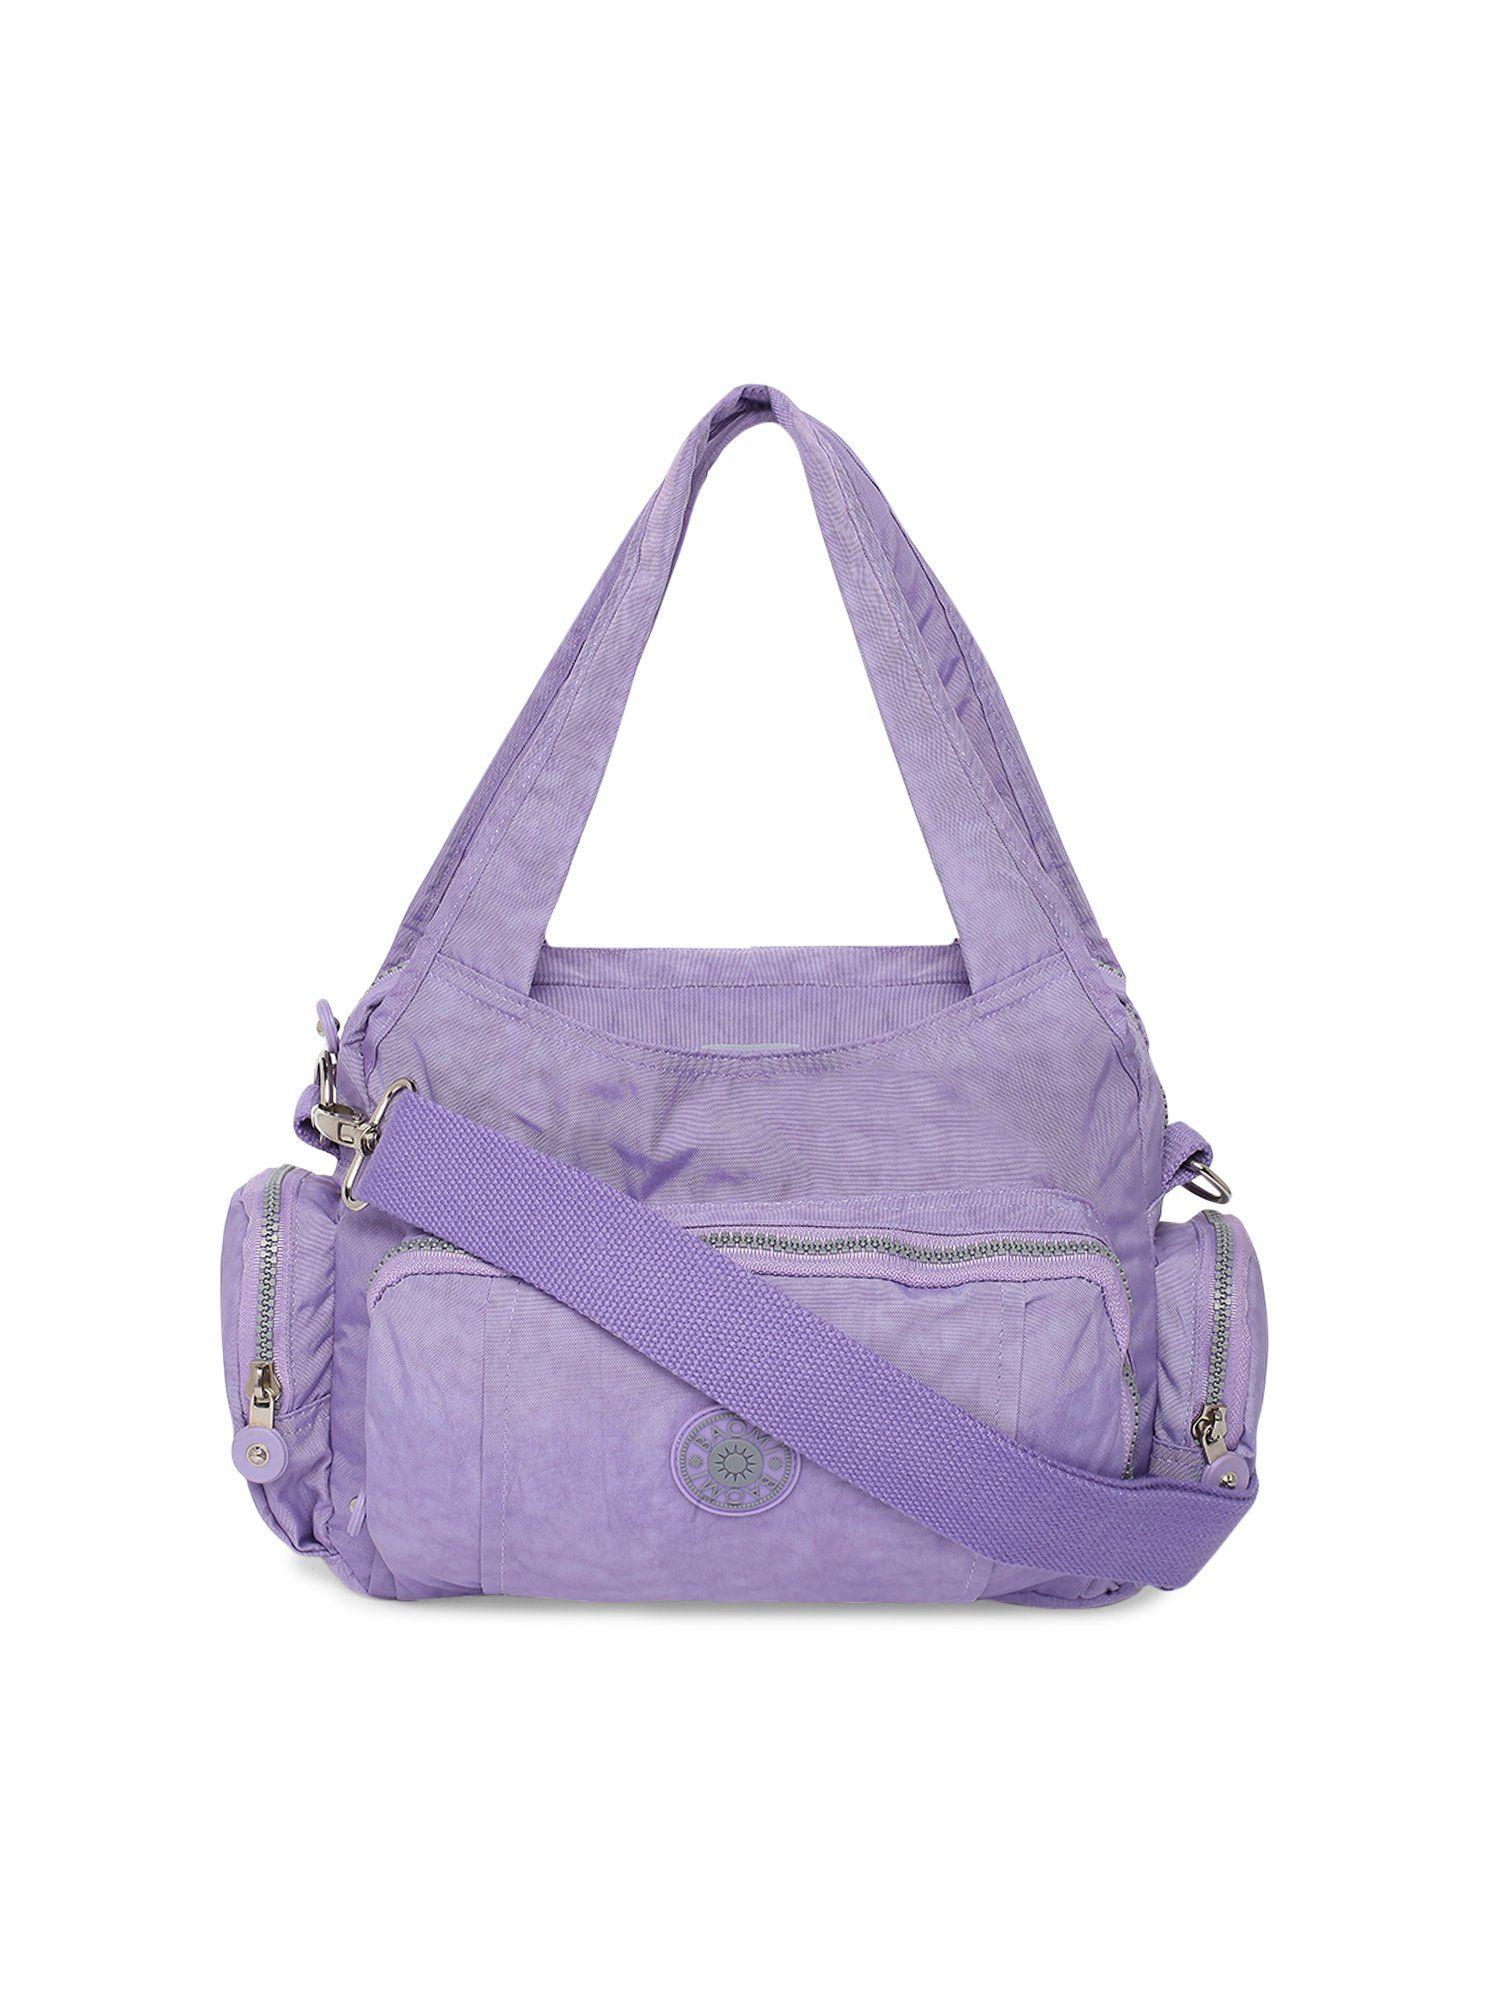 crinkle range light purple color soft case nylon handbag